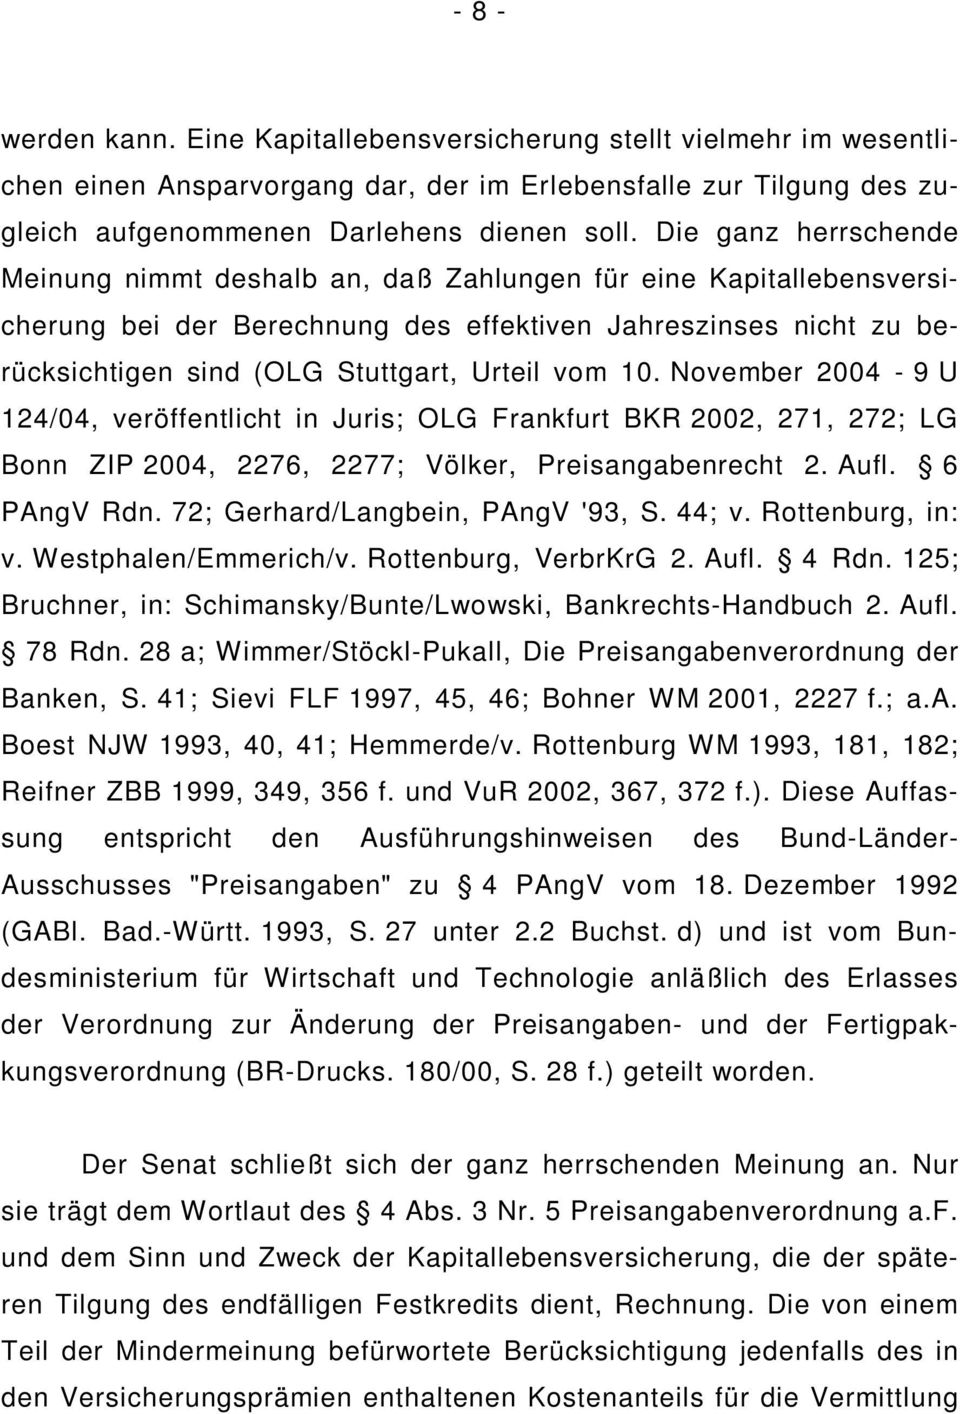 10. November 2004-9 U 124/04, veröffentlicht in Juris; OLG Frankfurt BKR 2002, 271, 272; LG Bonn ZIP 2004, 2276, 2277; Völker, Preisangabenrecht 2. Aufl. 6 PAngV Rdn.